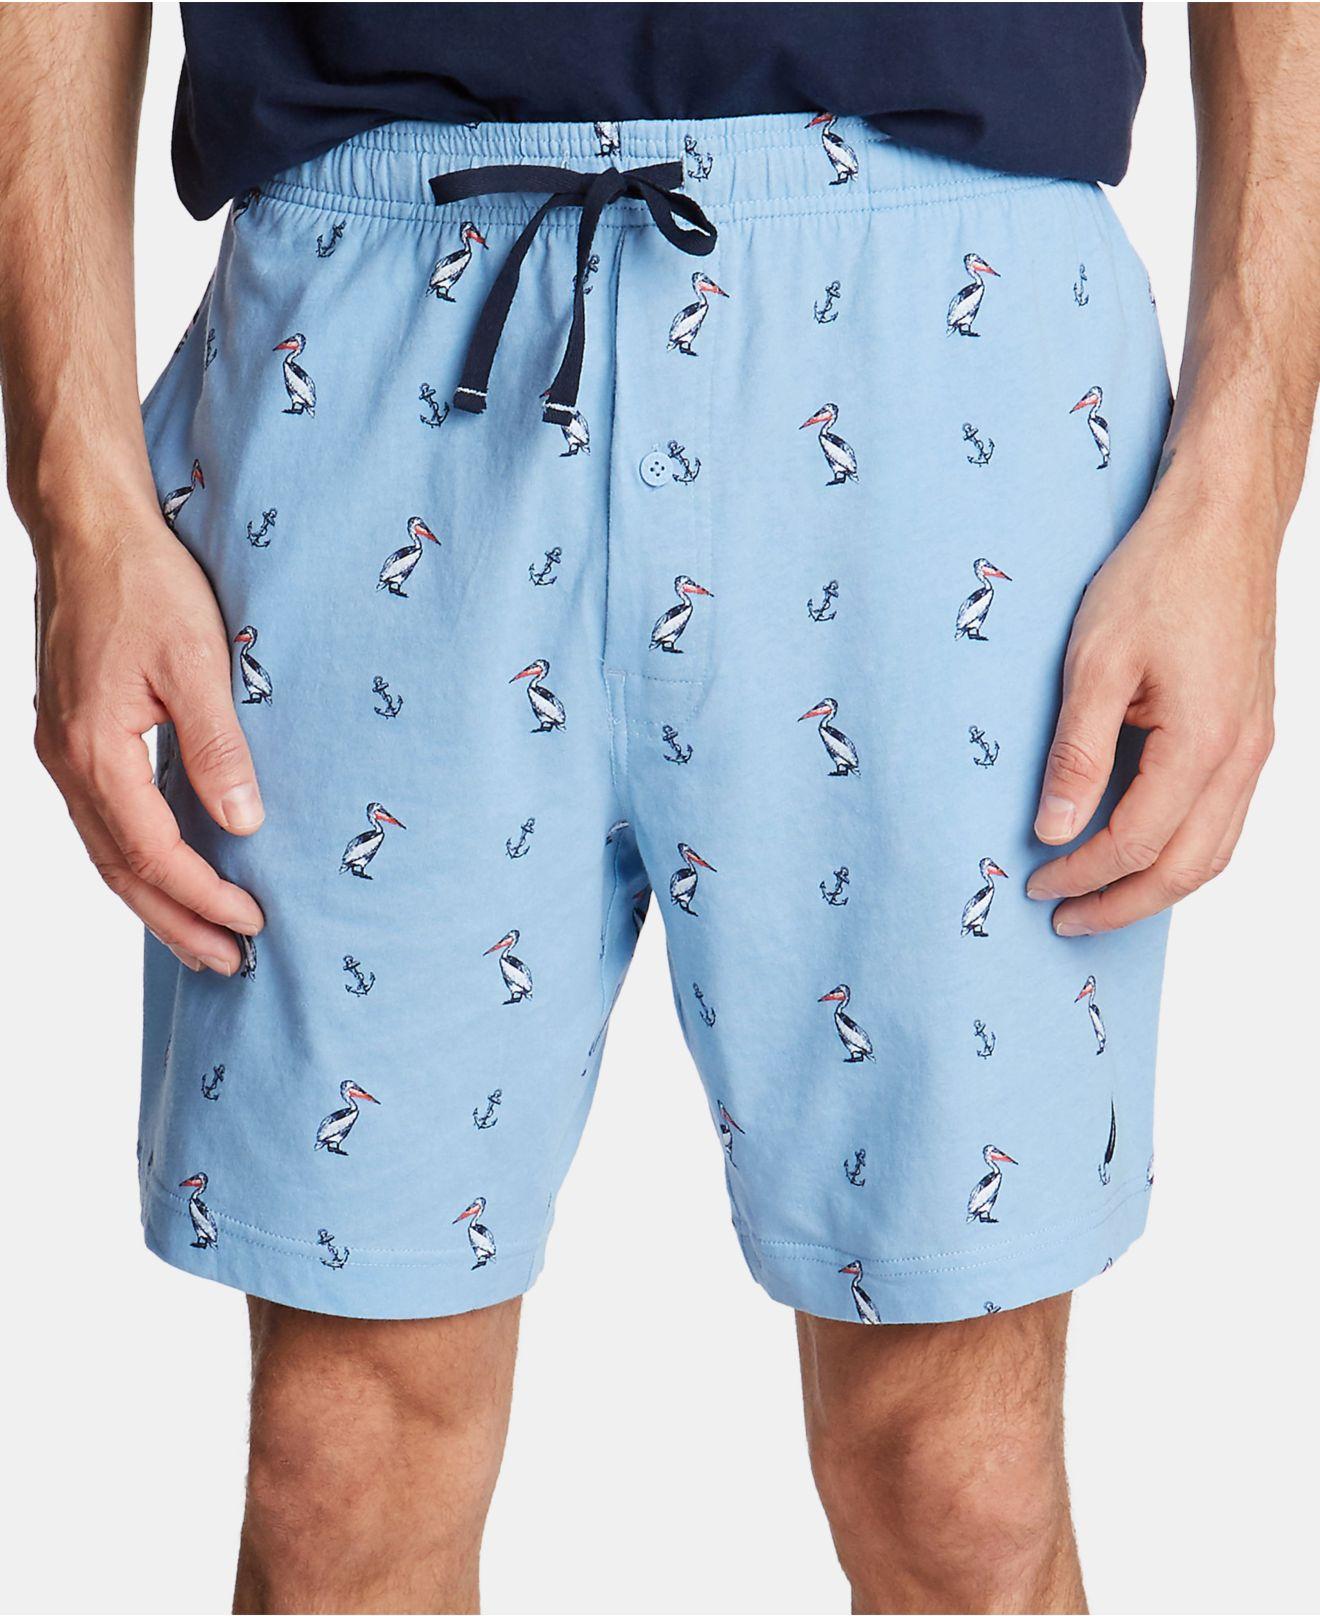 Nautica Cotton Pelican-print Pajama Shorts in Blue for Men - Lyst